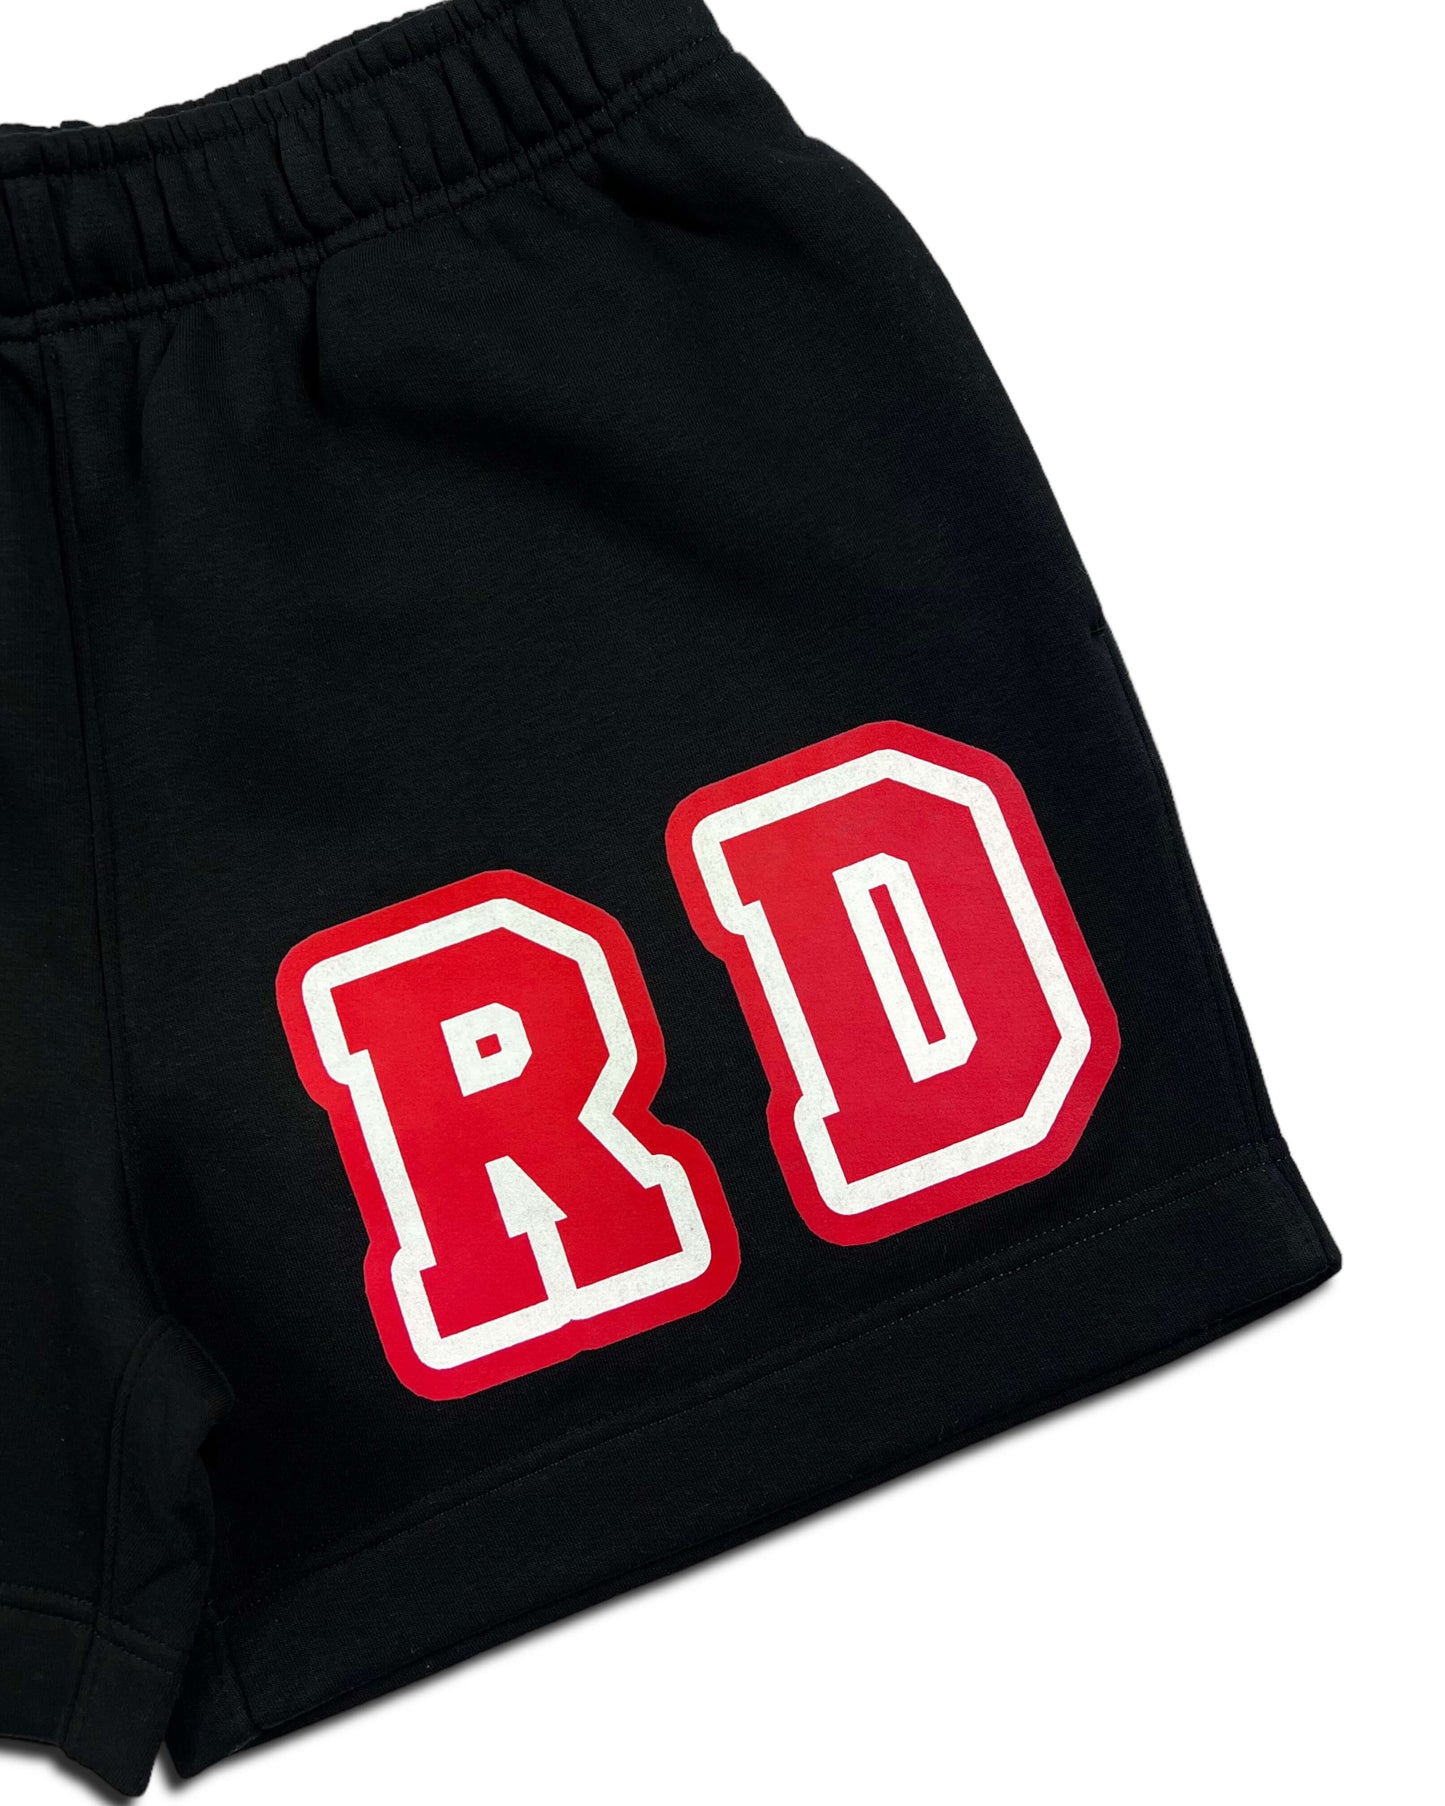 SKRD Sweat Shorts- Black/Red